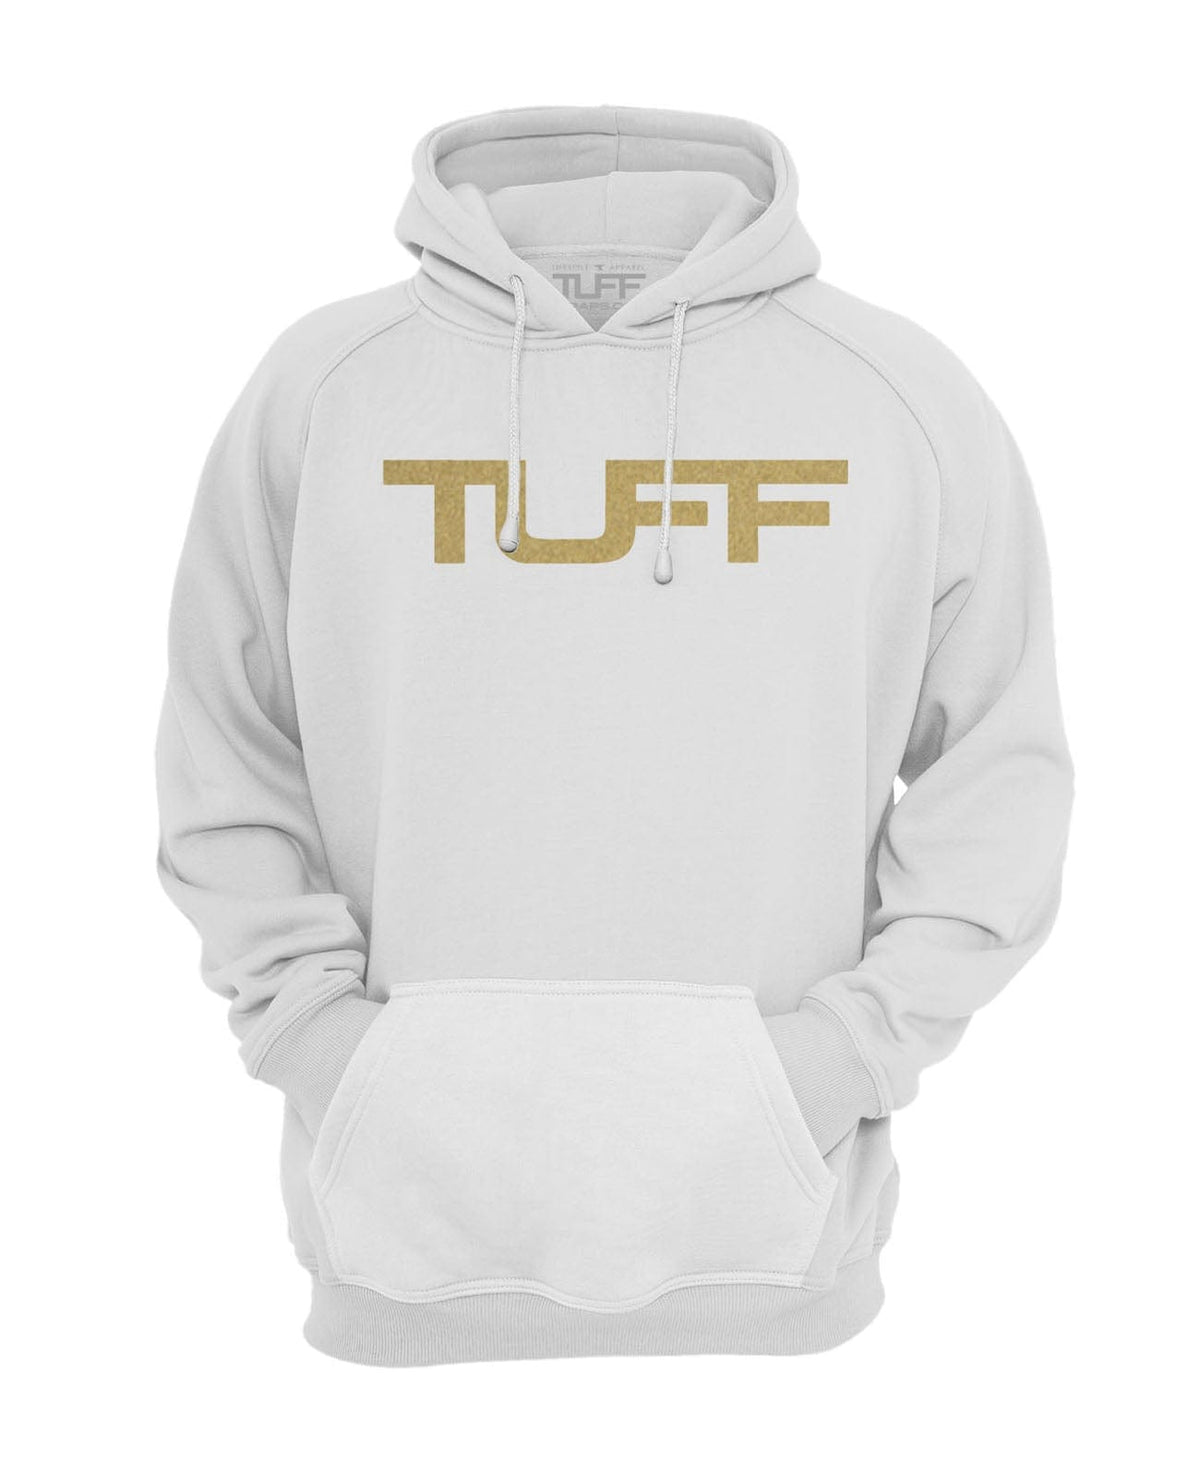 TUFF Apocalyptic Hooded Sweatshirt S / White w/Gold TuffWraps.com